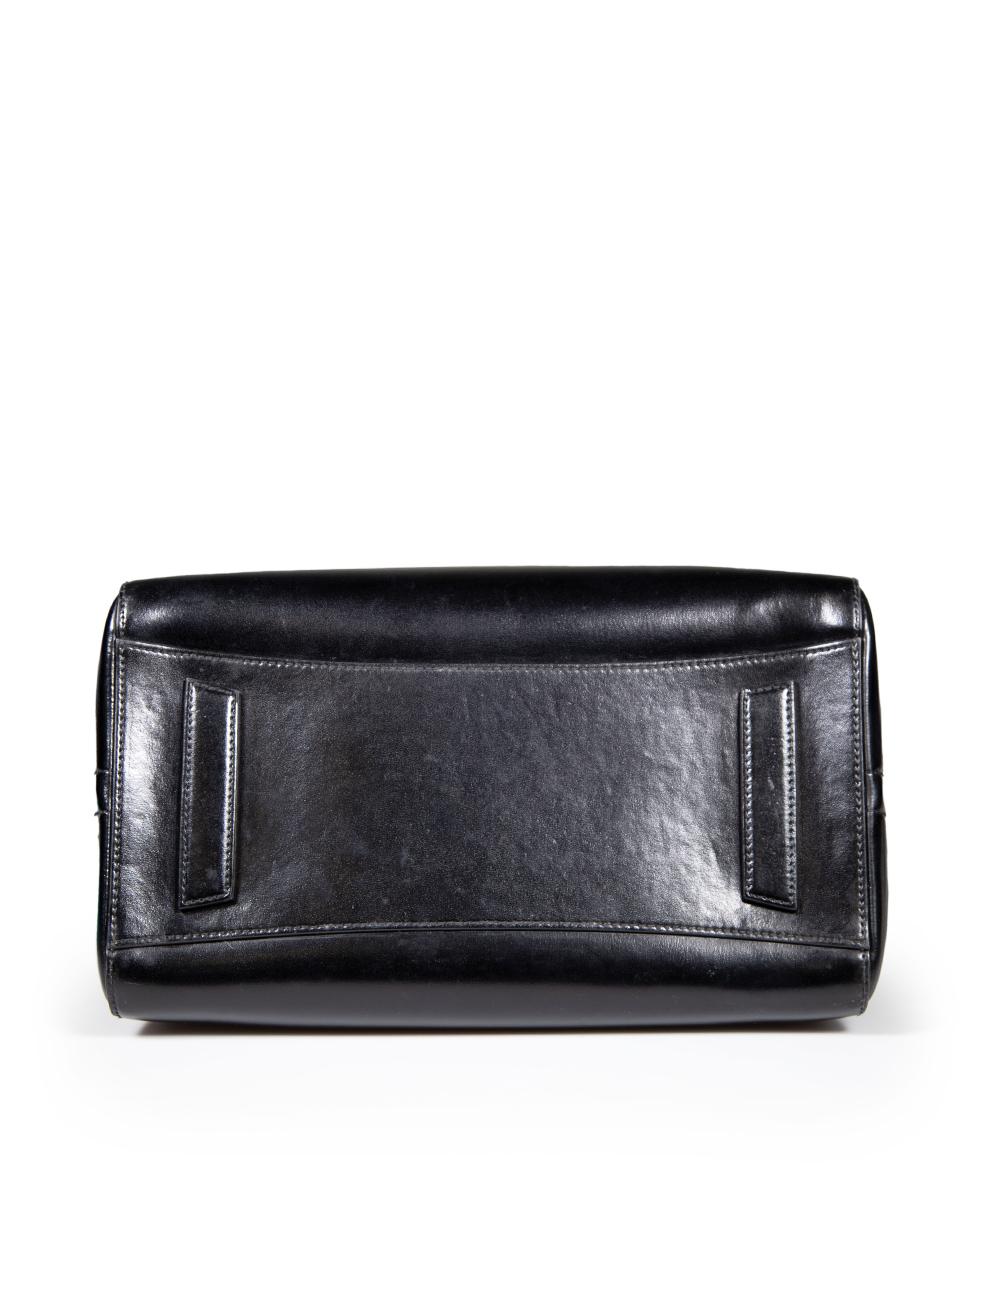 Women's Givenchy Black Leather Medium Antigona Handbag For Sale